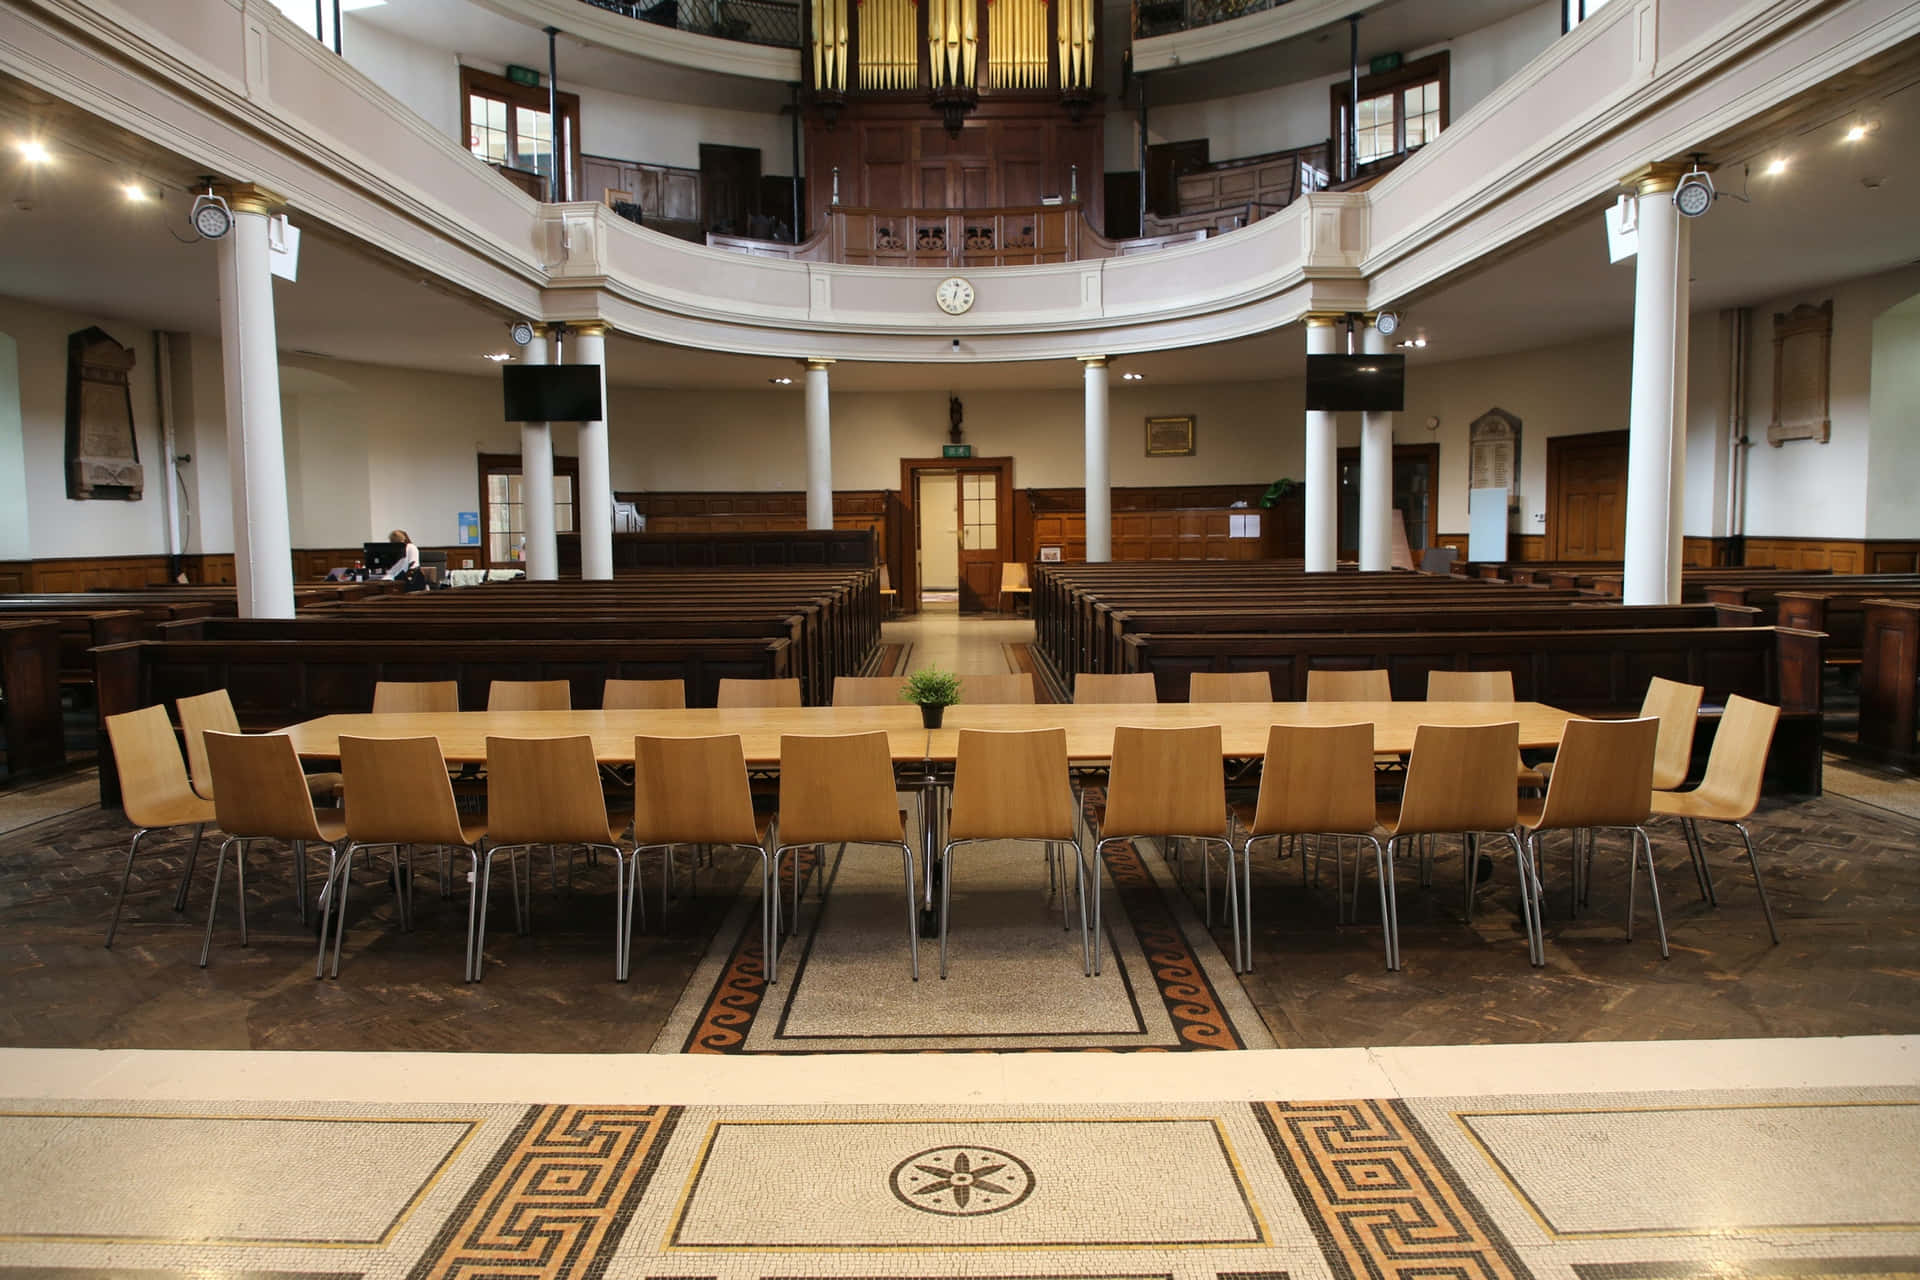 A Church With A Circular Floor